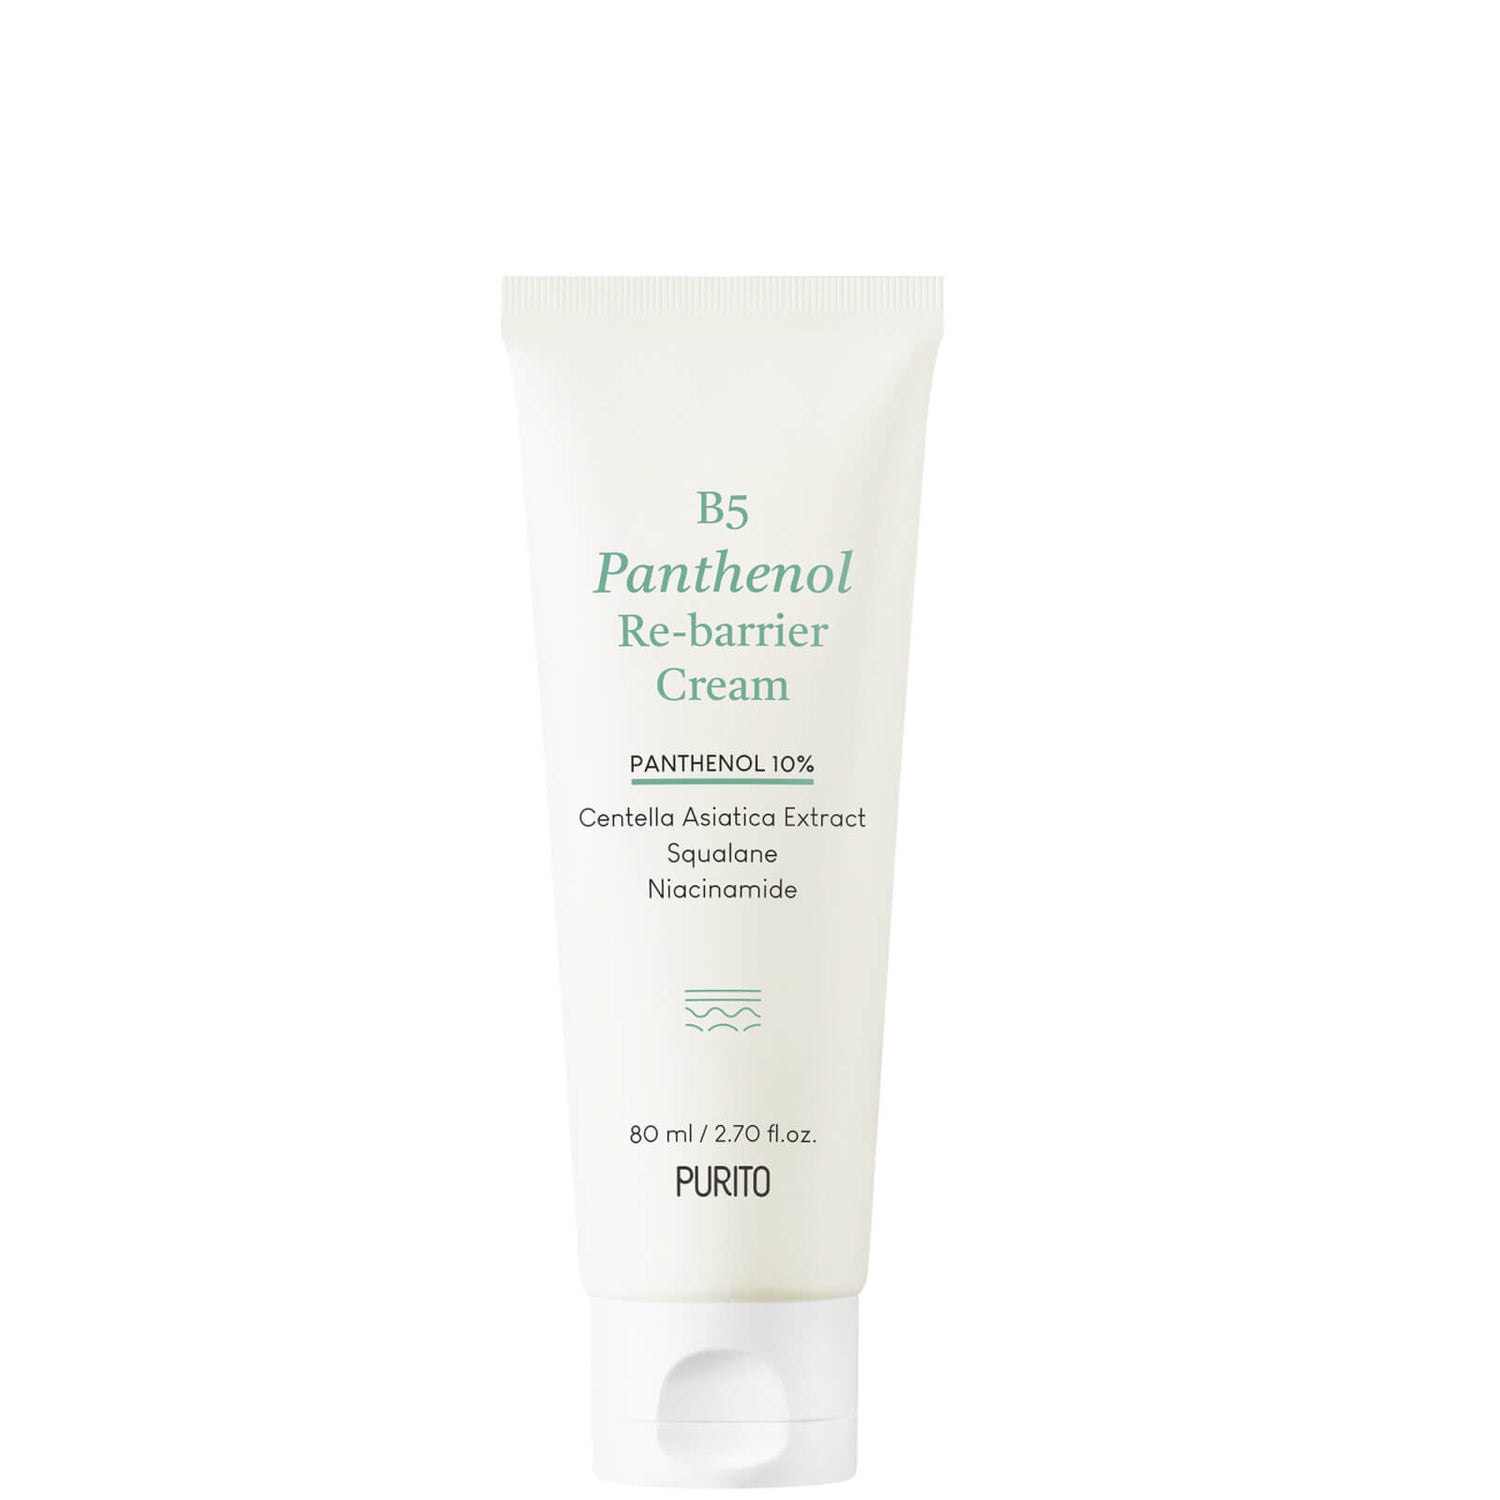 PURITO B5 Panthenol Re-barrier Cream 80ml